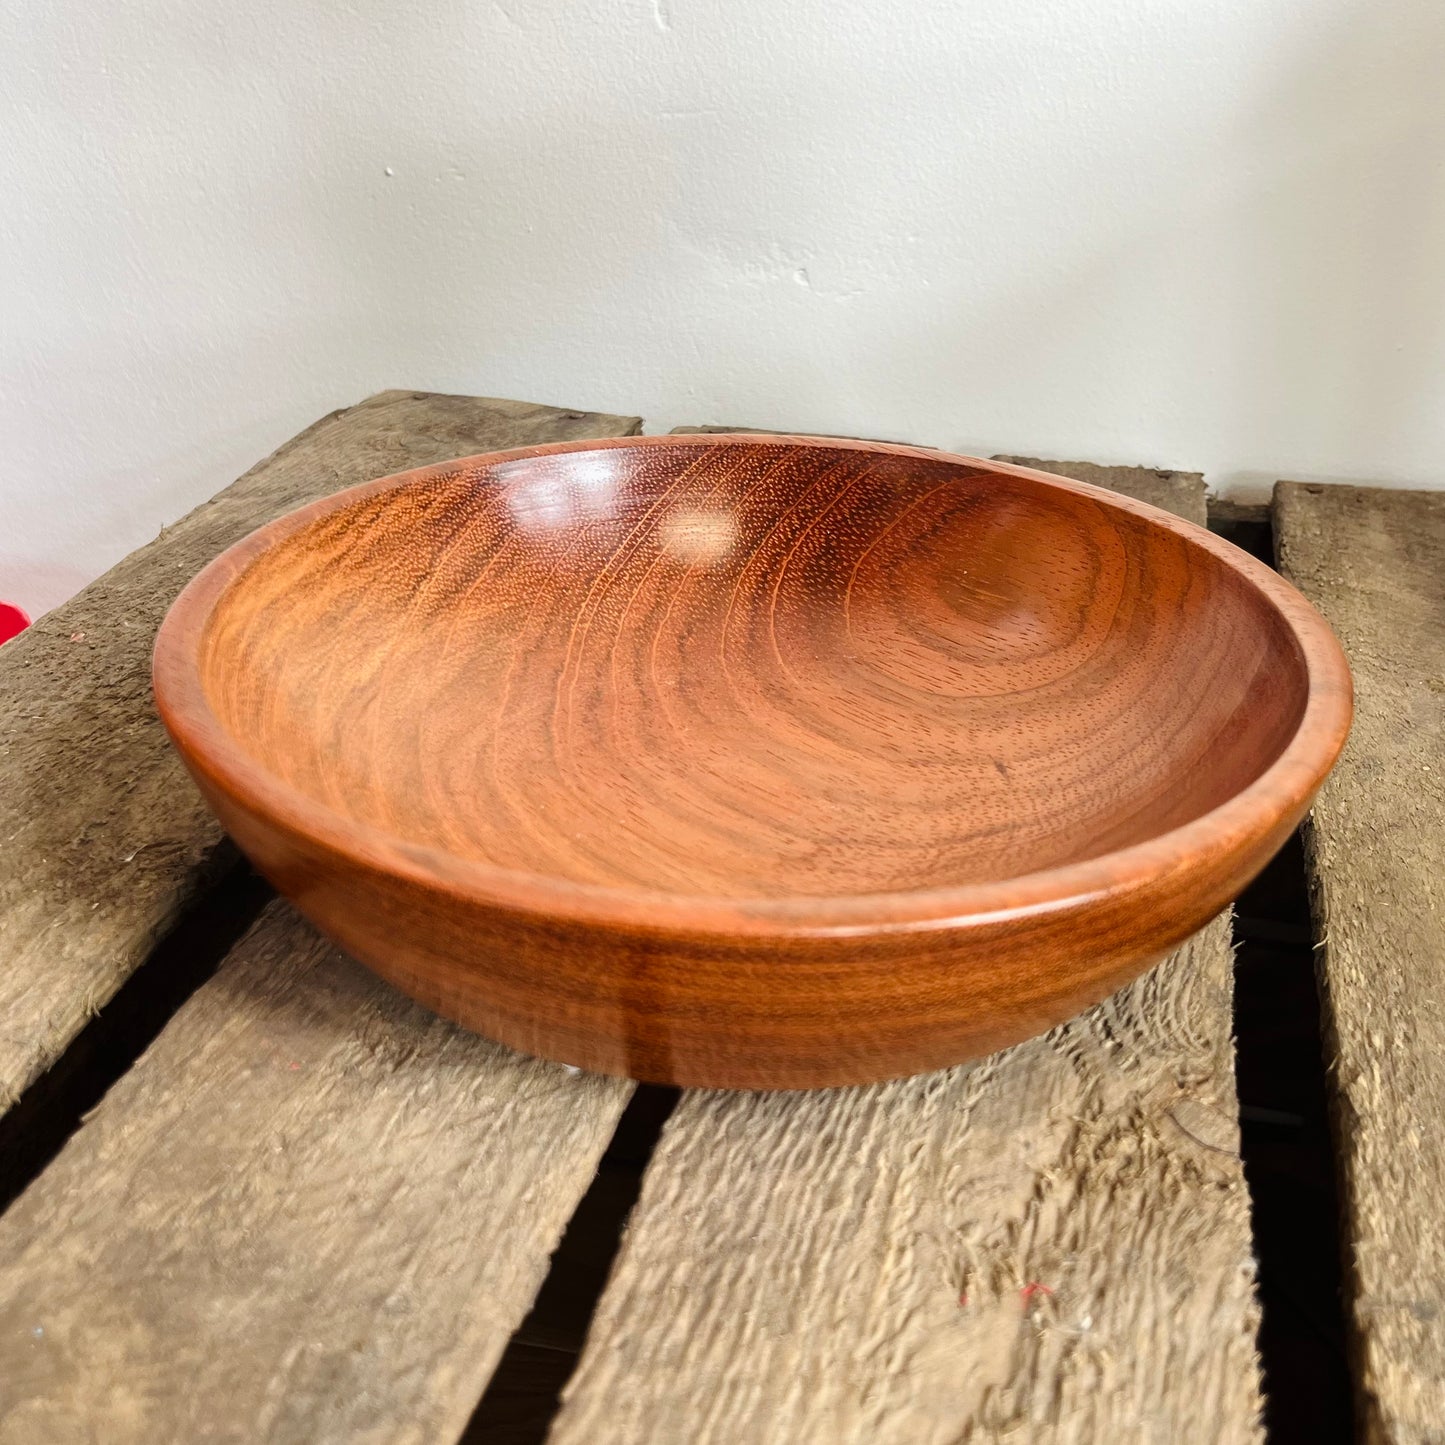 Zebrano wood bowl